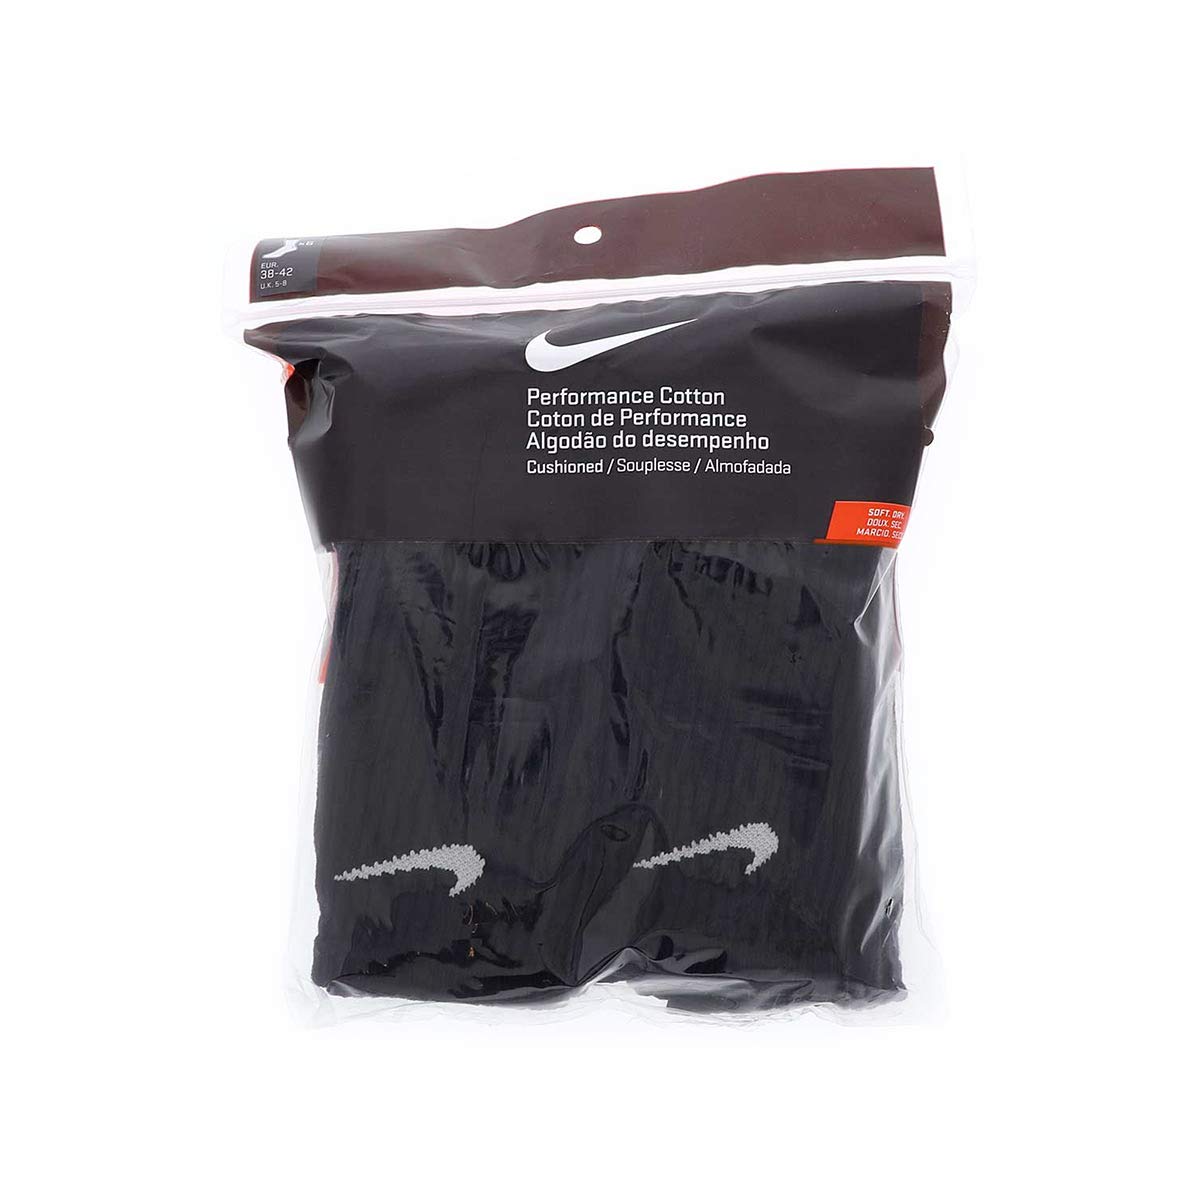 NIKE Unisex Performance Cushion Crew Socks with Bag (6 Pairs), Black/White, Medium